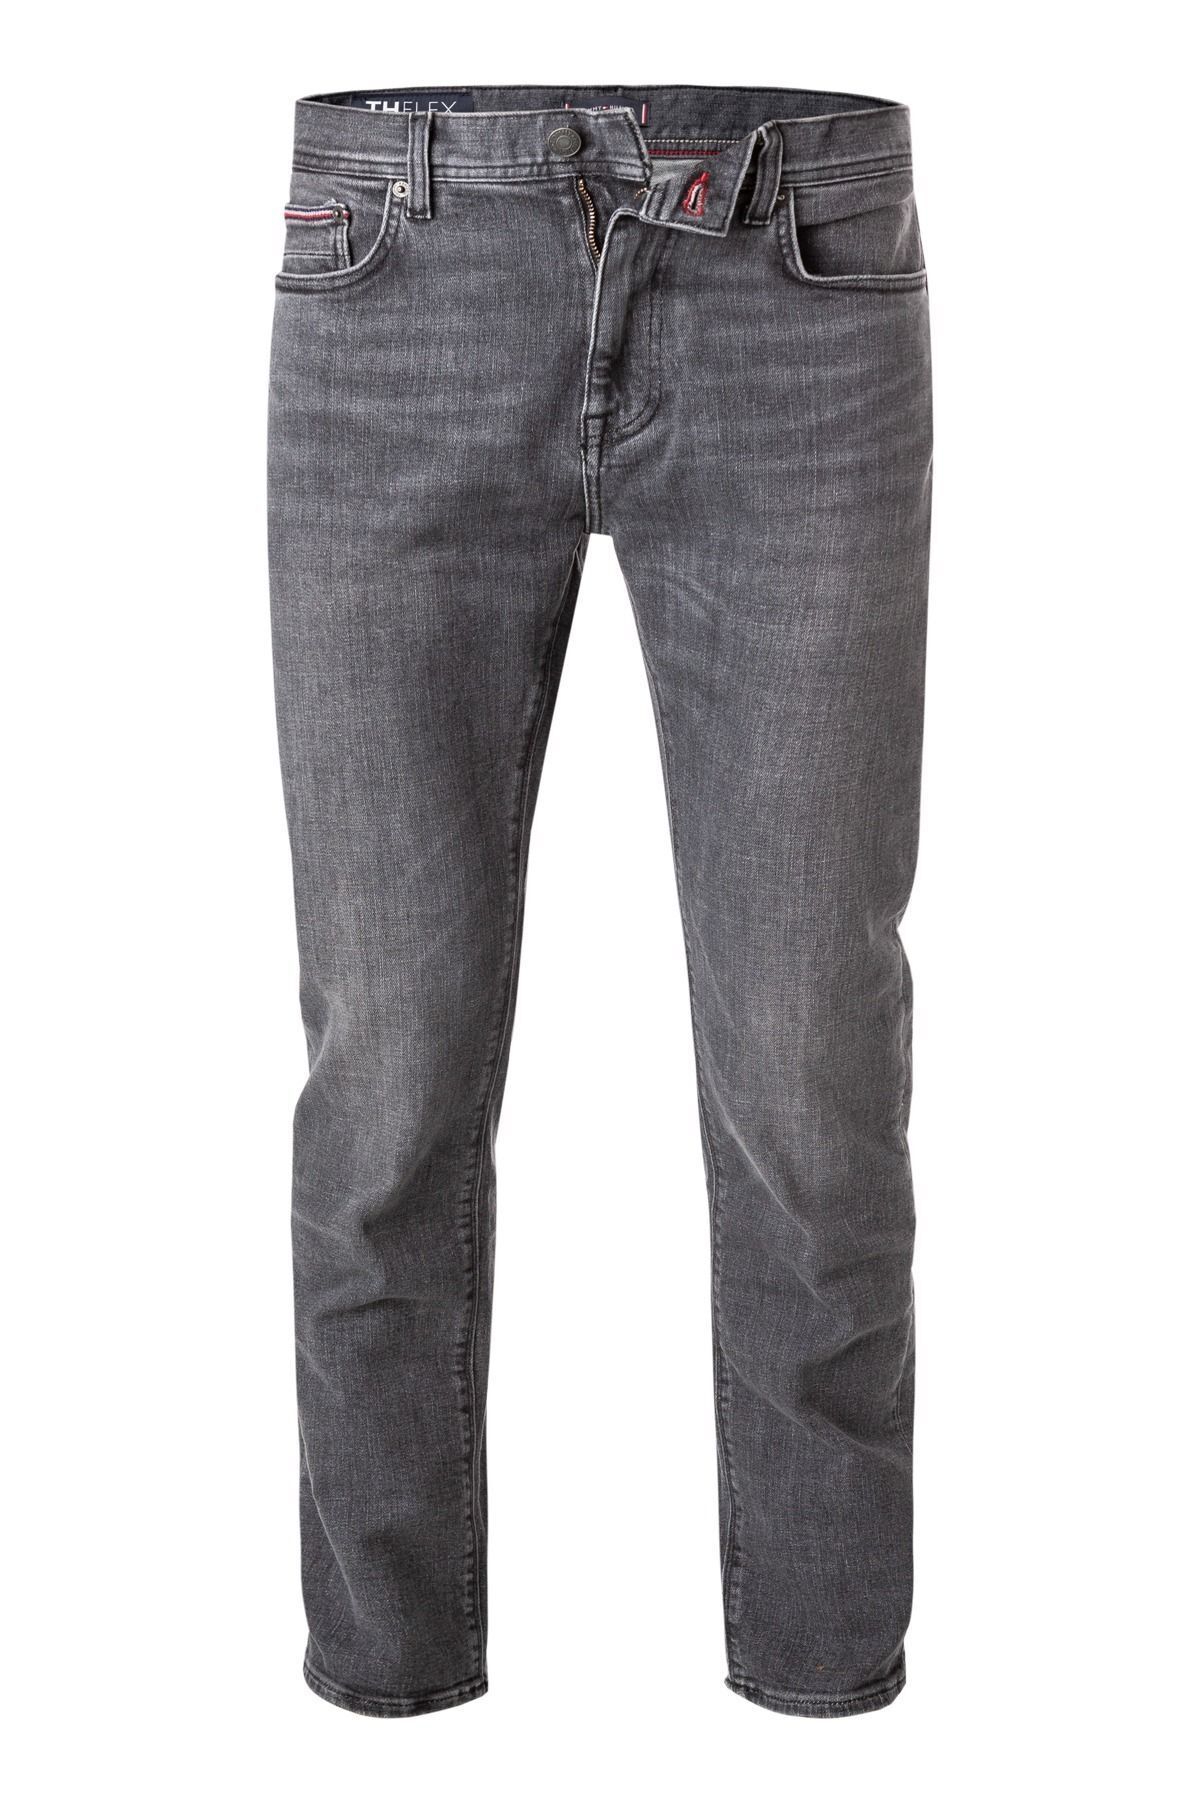 Tommy Hilfiger Erkek Denim Normal Belli Düz Model Günlük Kullanım Mavi1 Jeans MW0MW33965-1B4